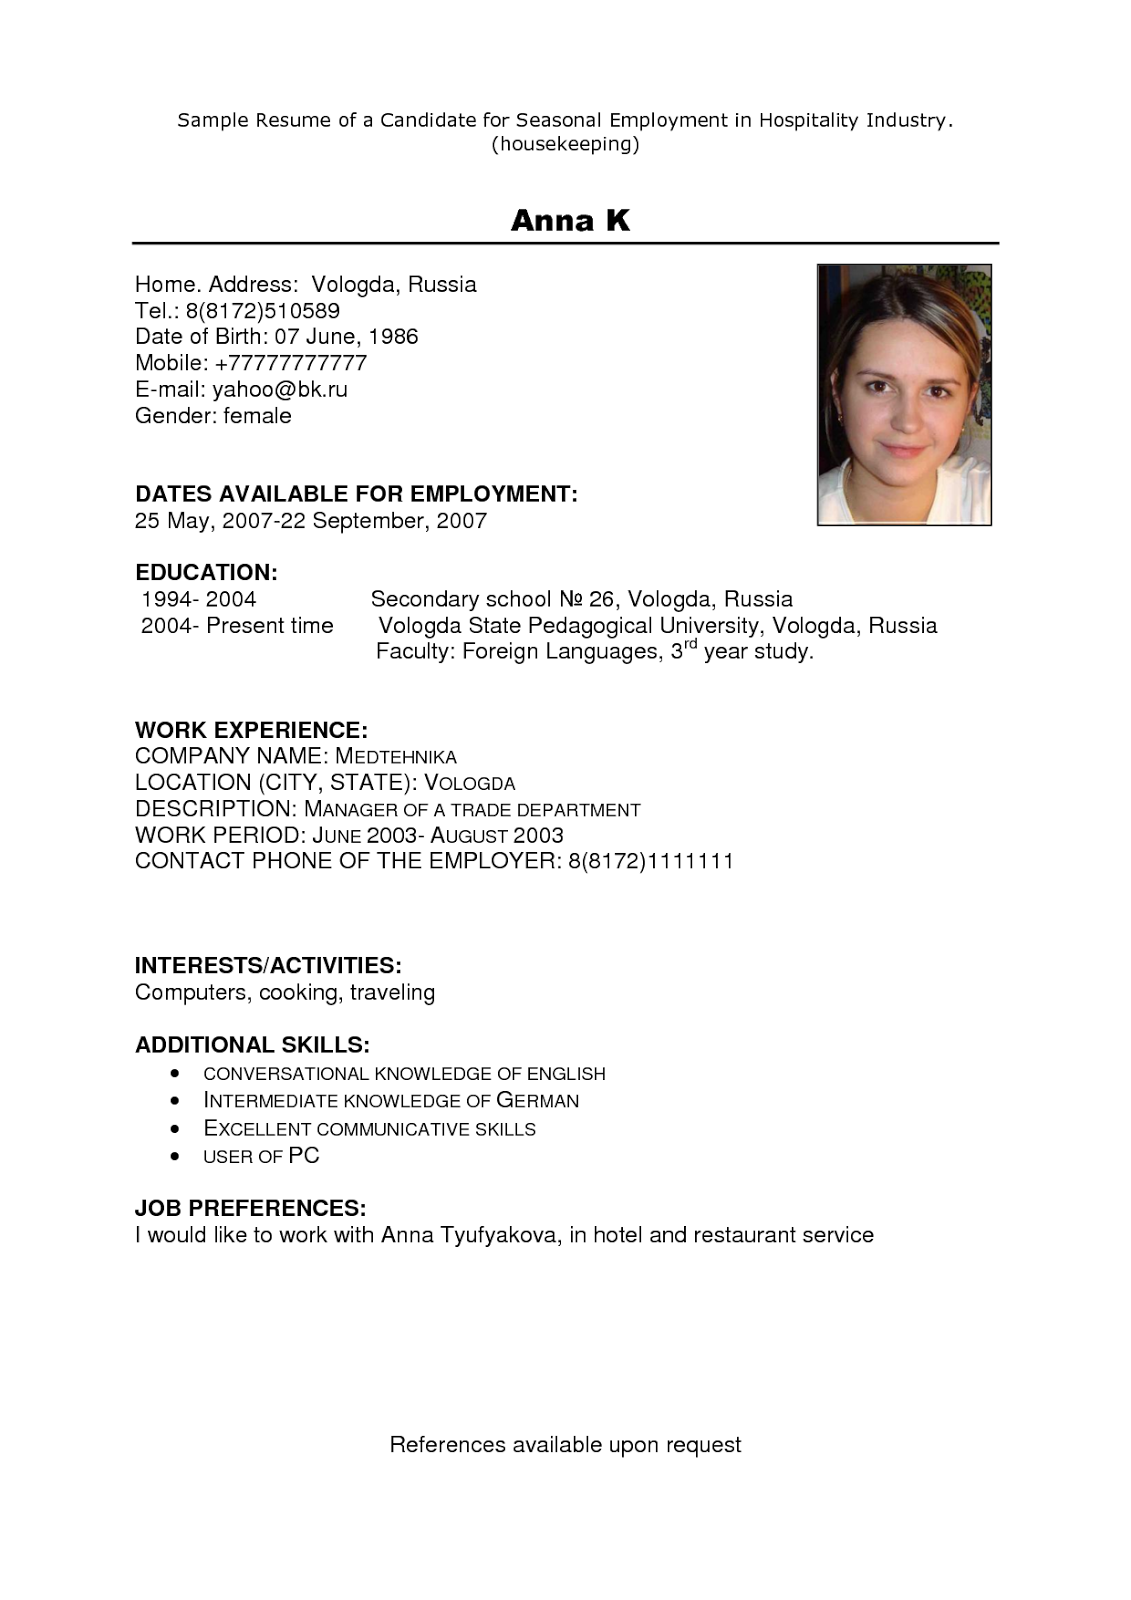 Sample resume format for it jobs